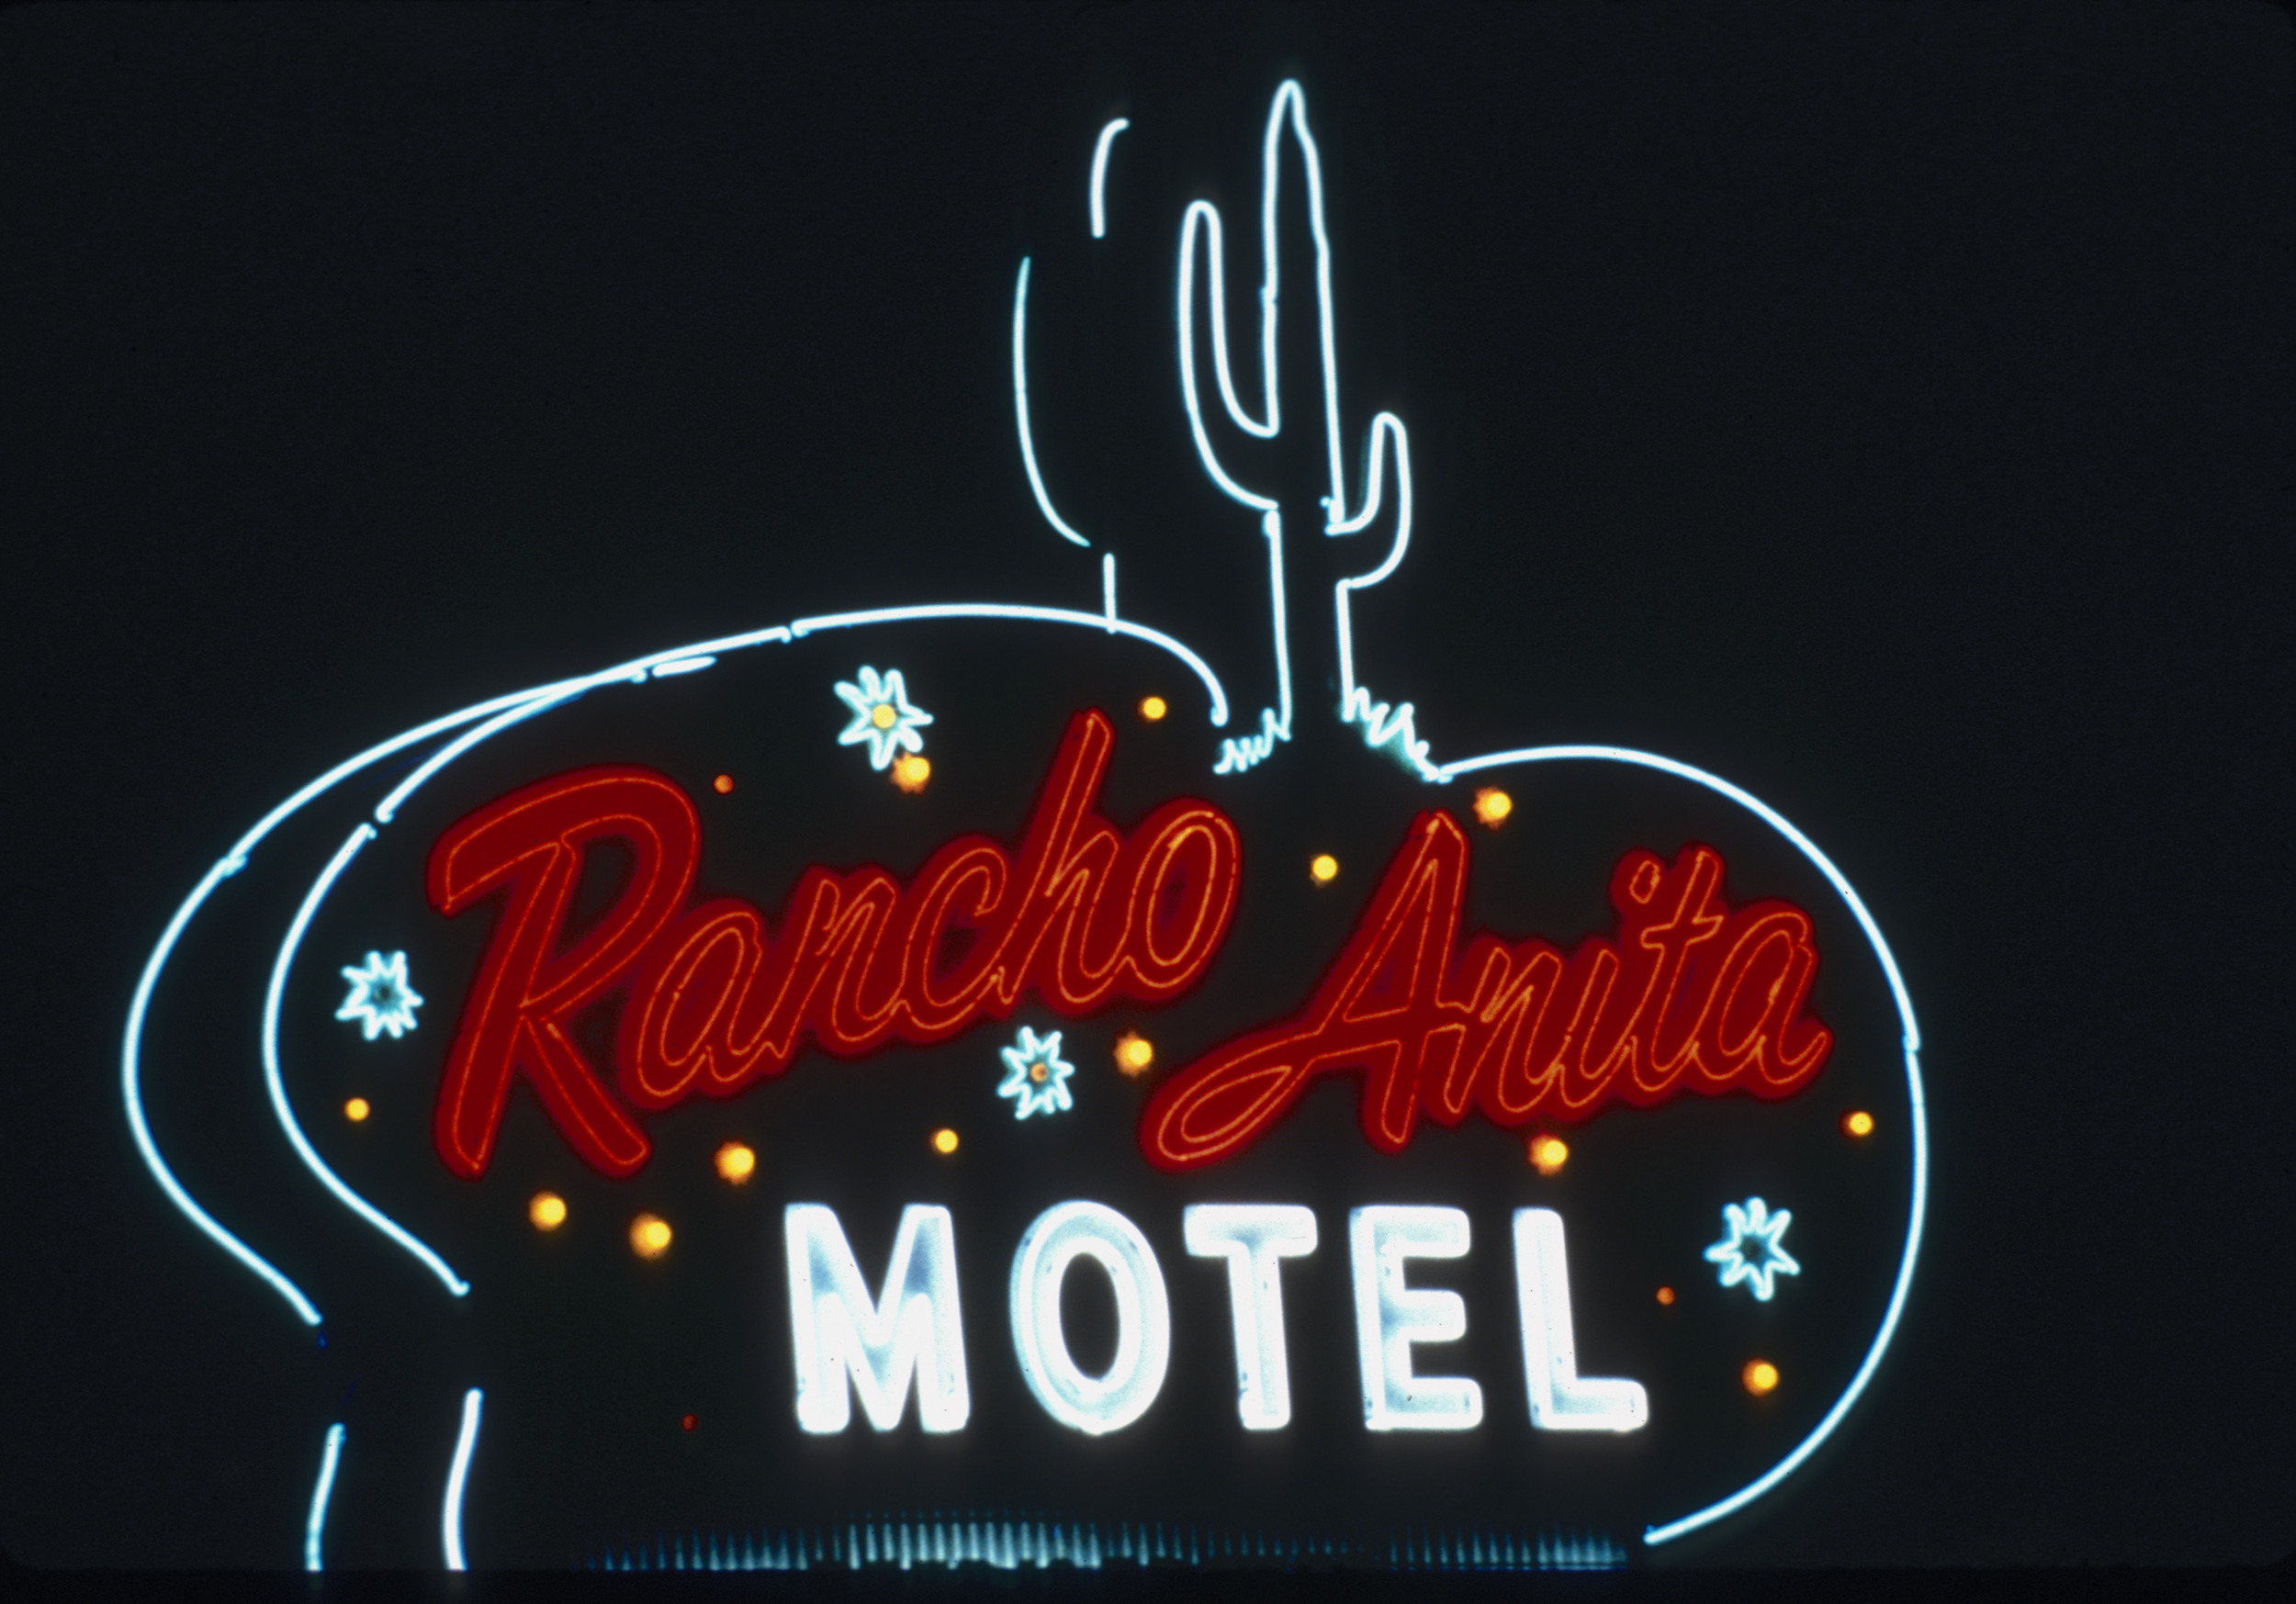 Slide of the neon sign for the Rancho Anita Motel, Las Vegas, 1986